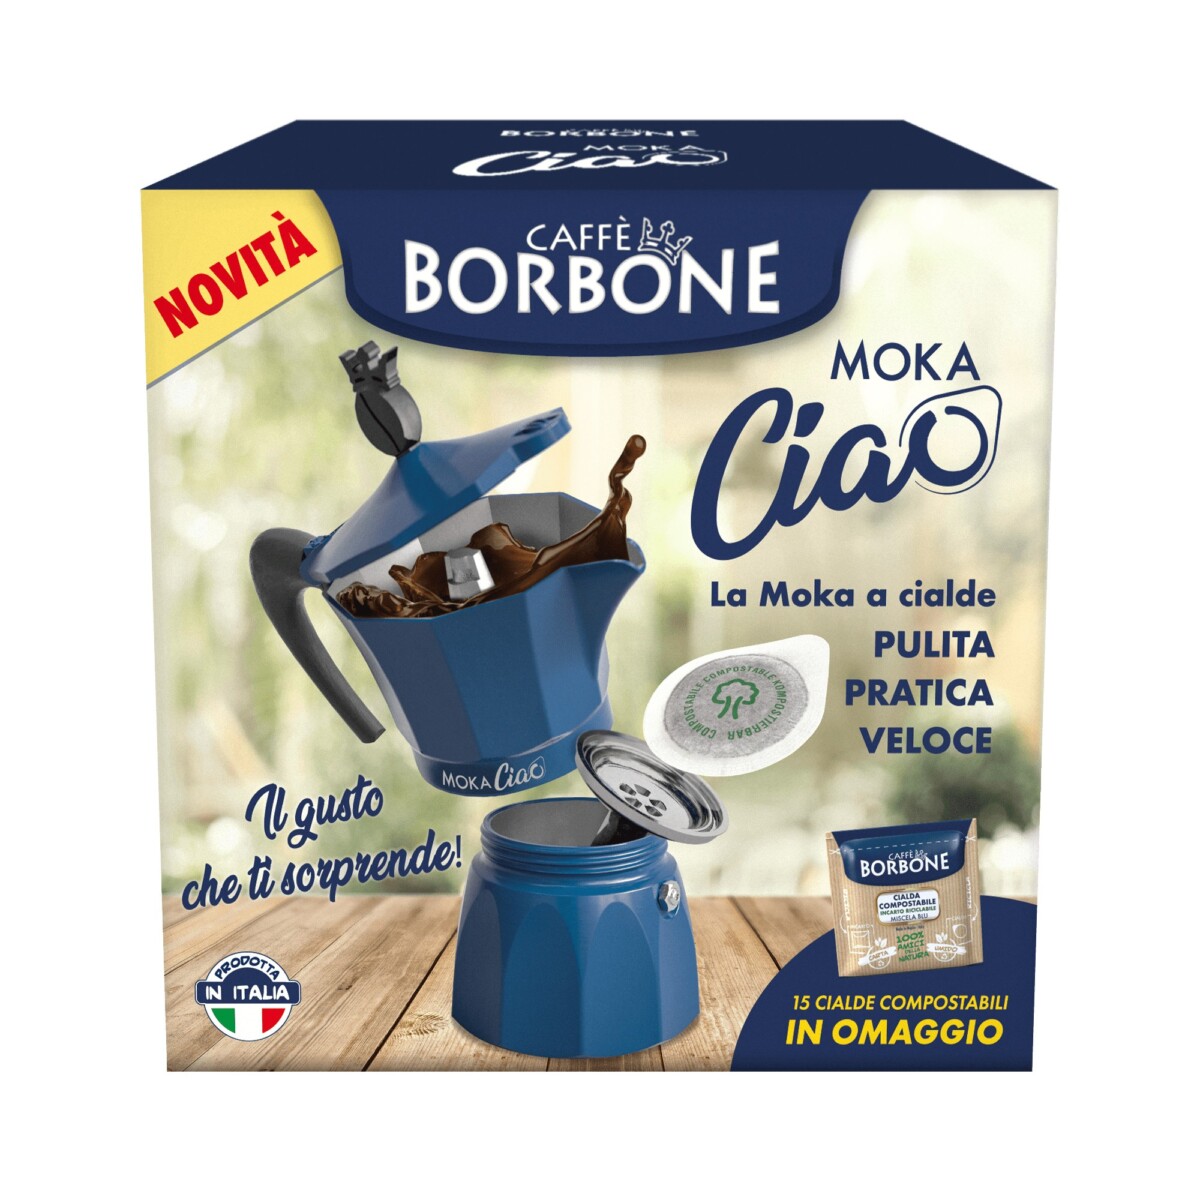 A Host 2023 Caffè Borbone presenta l'innovativa moka a cialde MokaCiao -  Vending Magazine